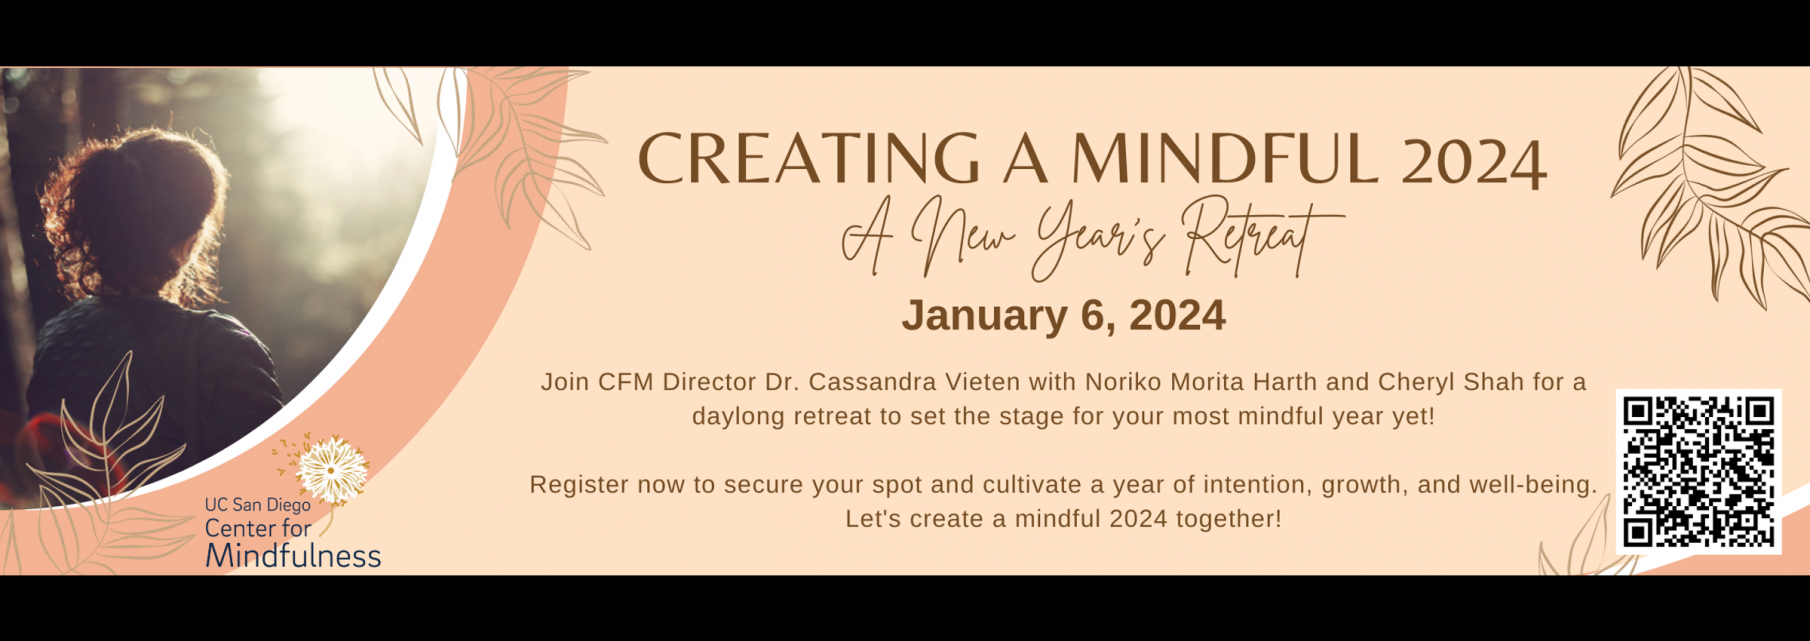 Sign up for CFM's Mindful Retreat on Jan 6, 2024